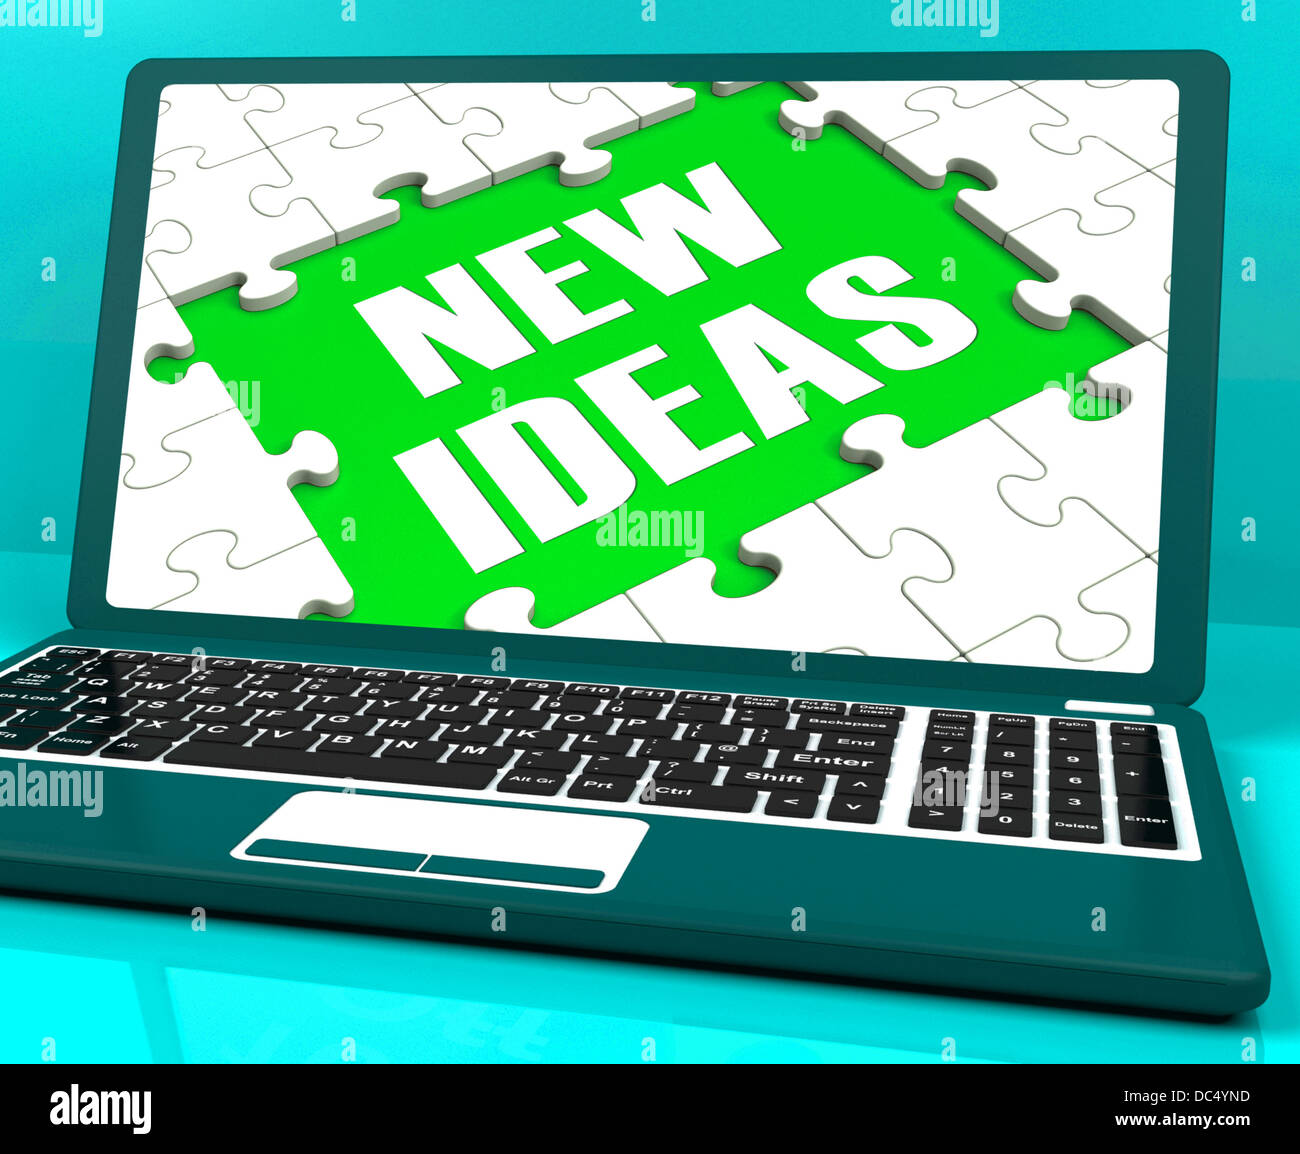 New Ideas On Laptop Showing Innovative Ideas Stock Photo